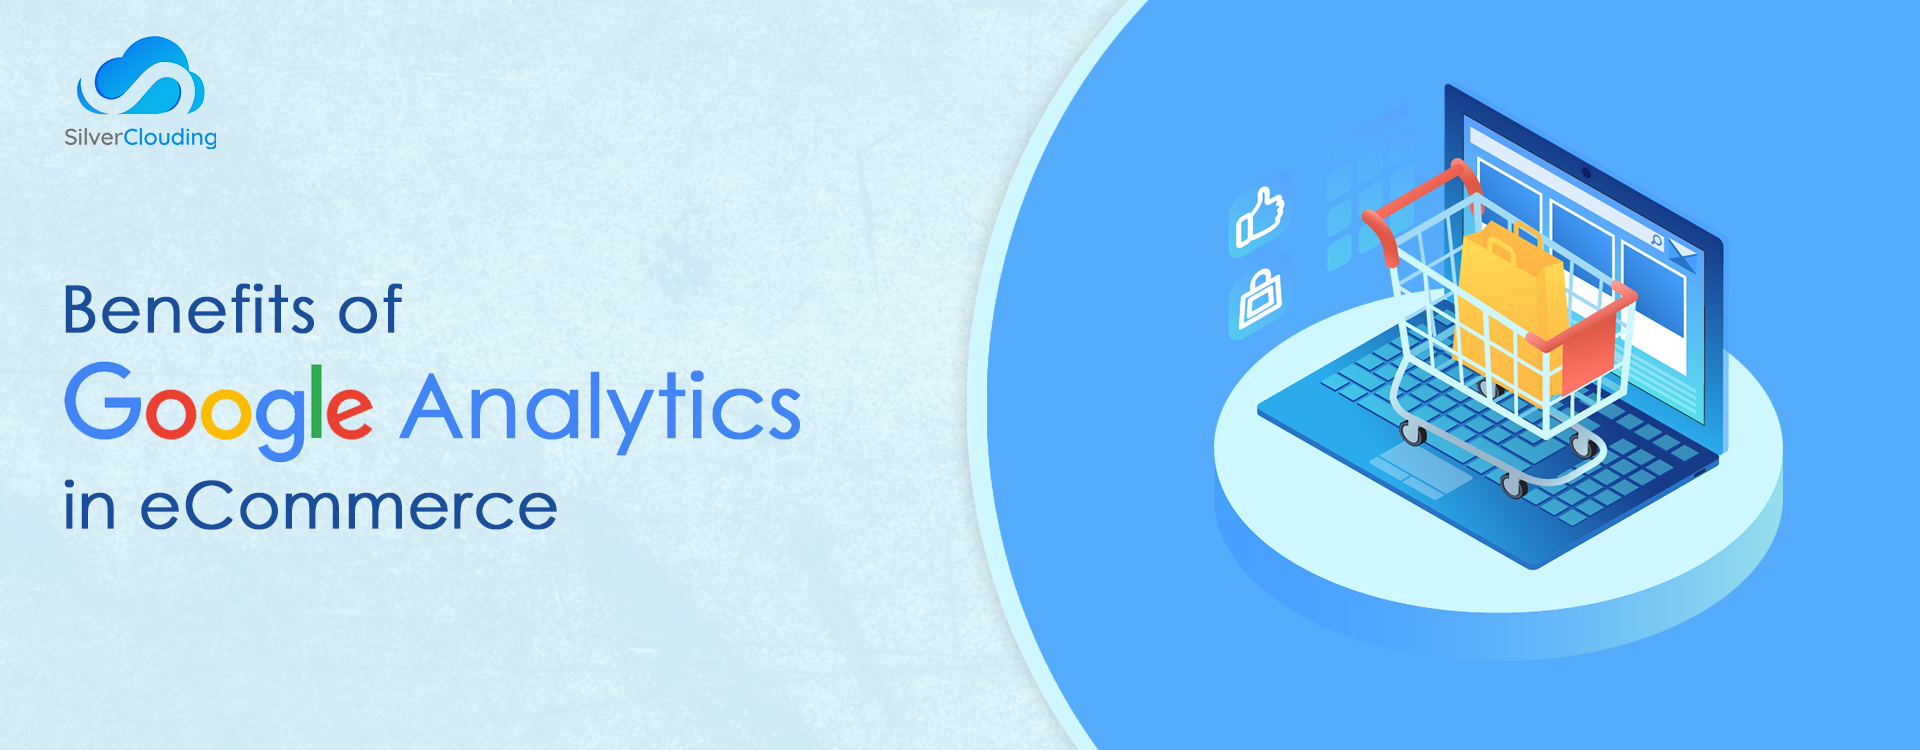 Benefits of Google Analytics in eCommerce